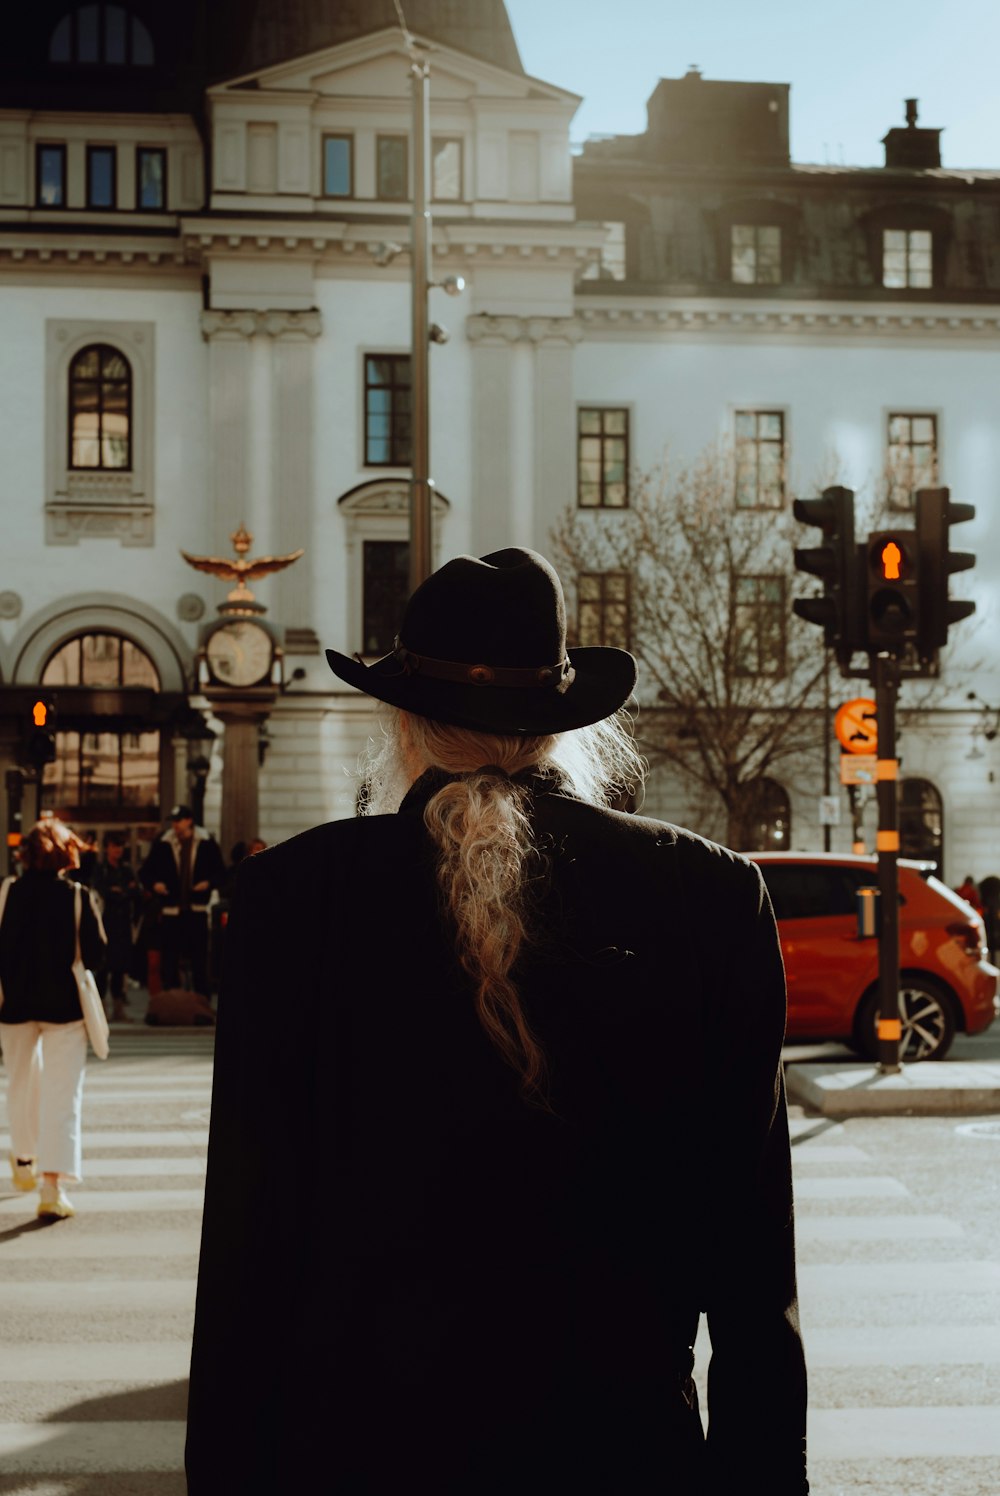 a man with a long beard wearing a hat